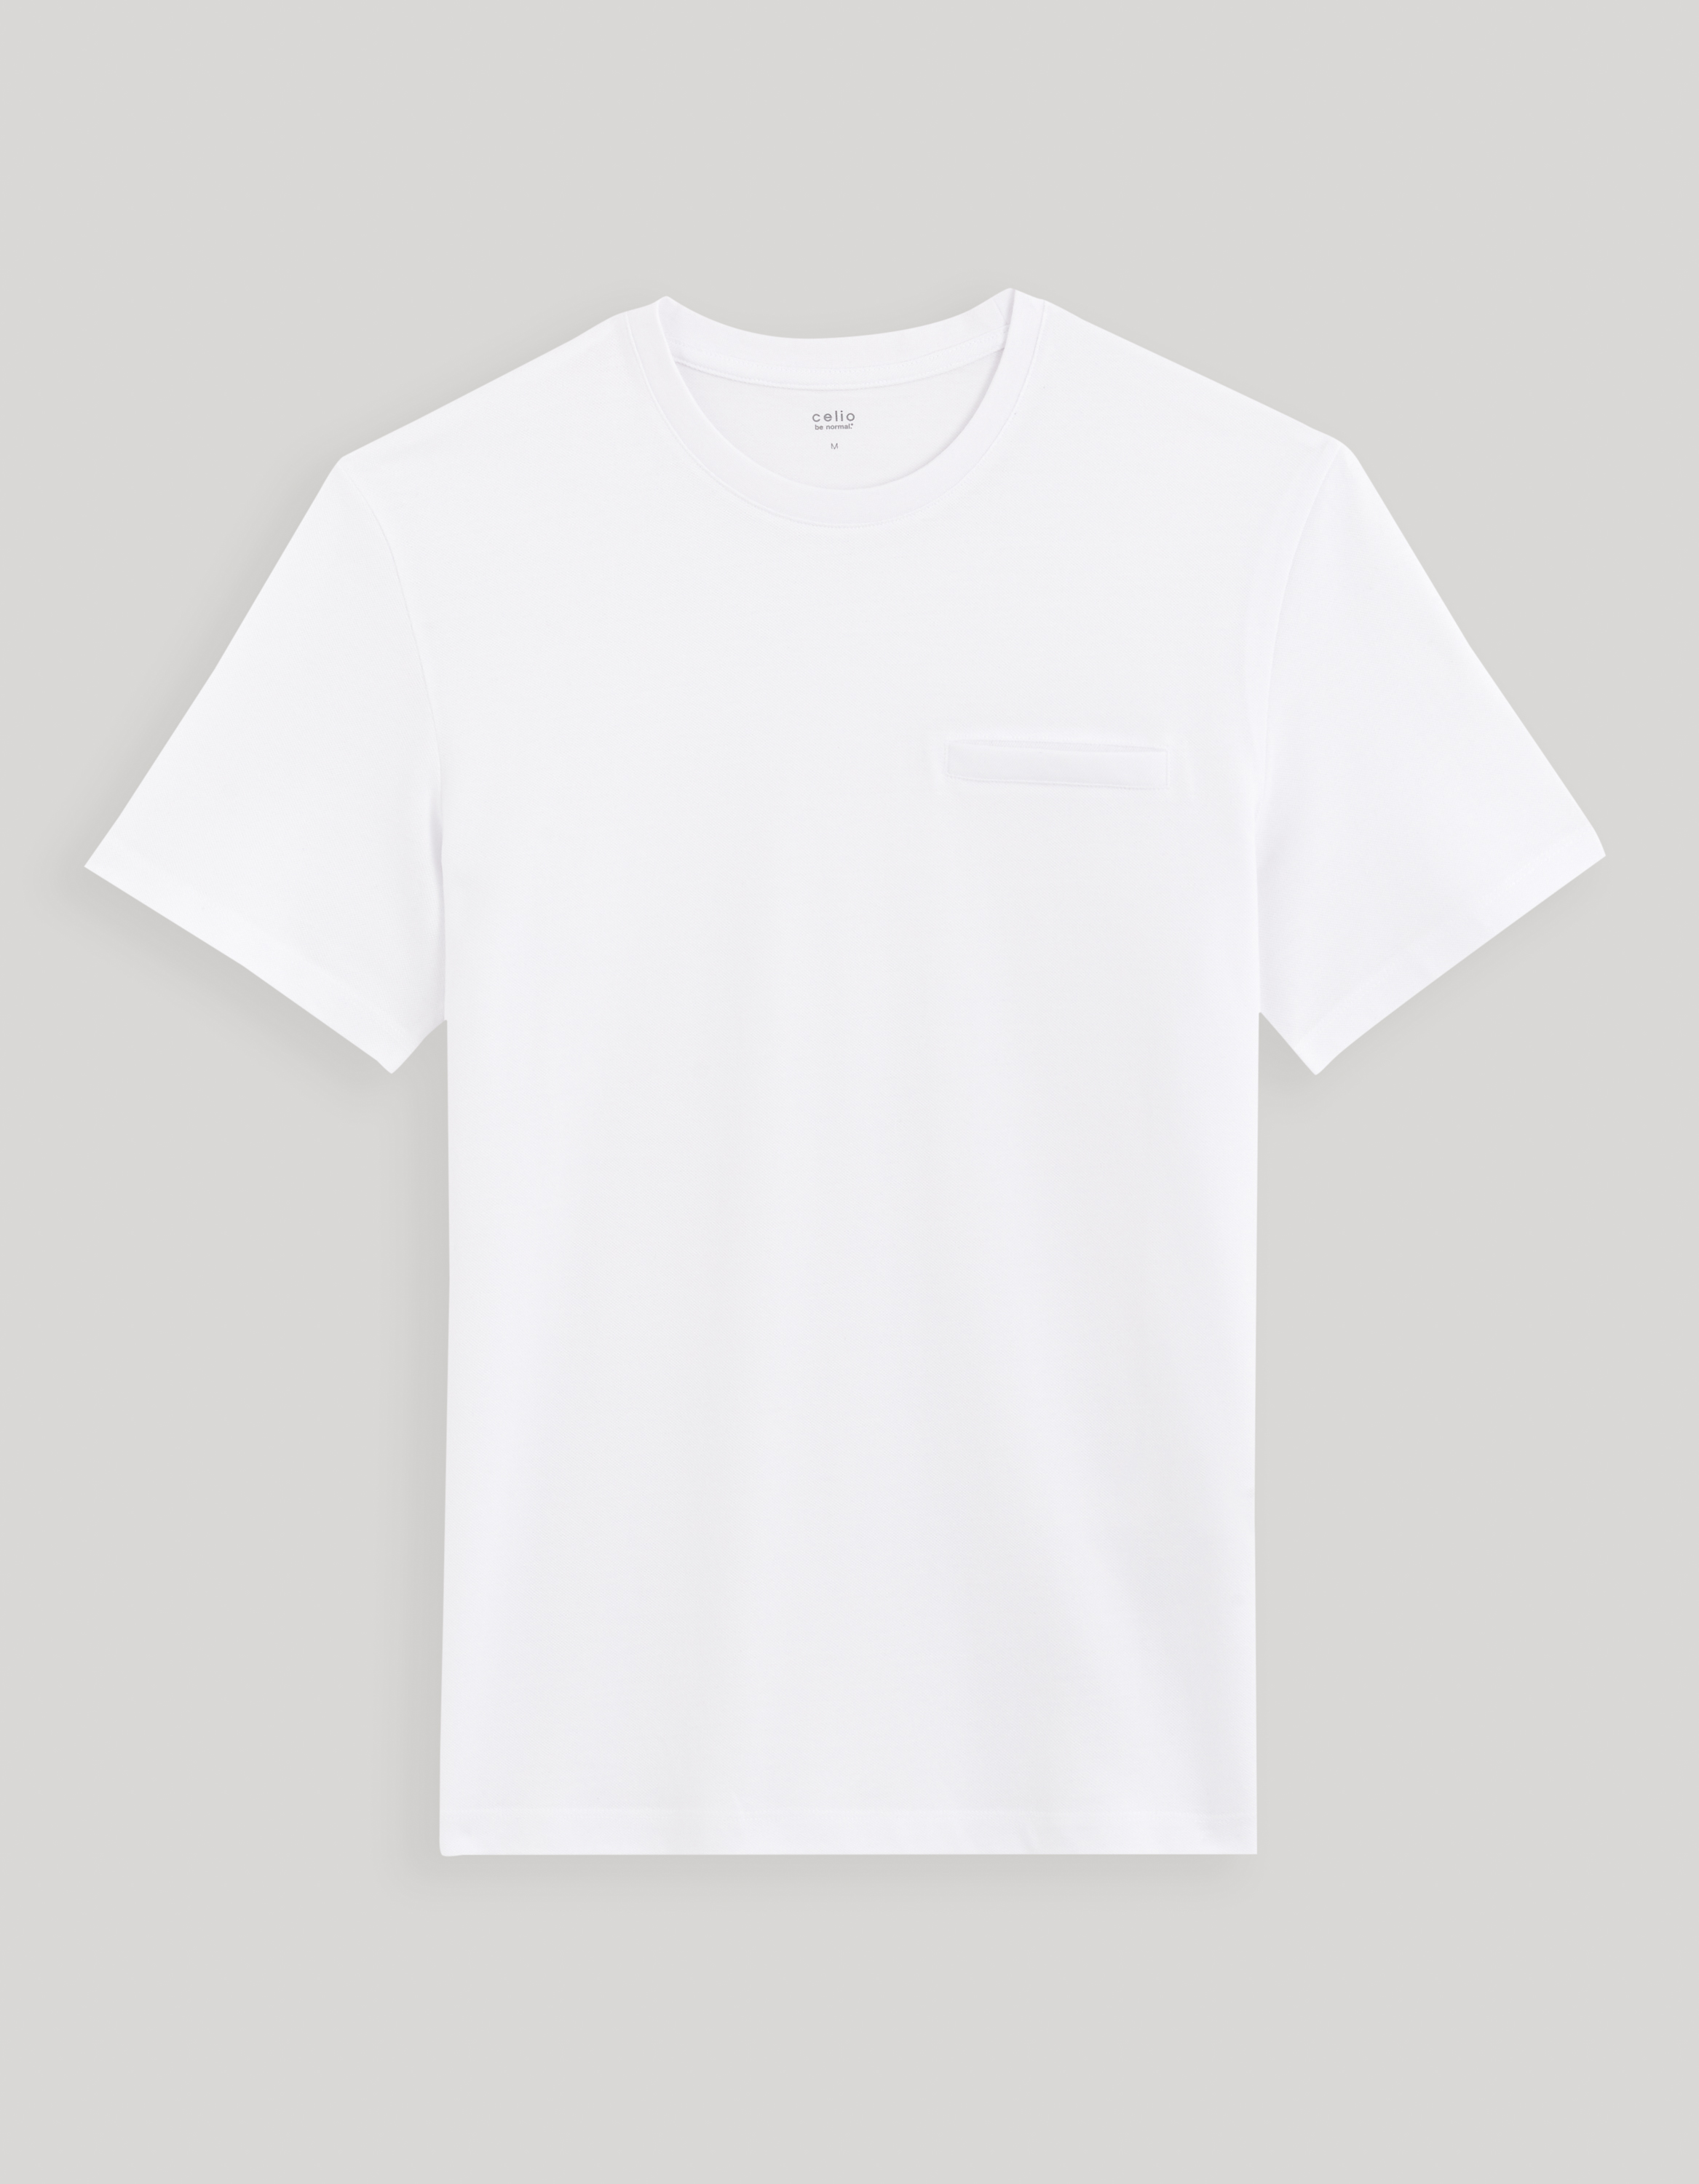 Celio Cotton T-shirt Gepopiff - Men's